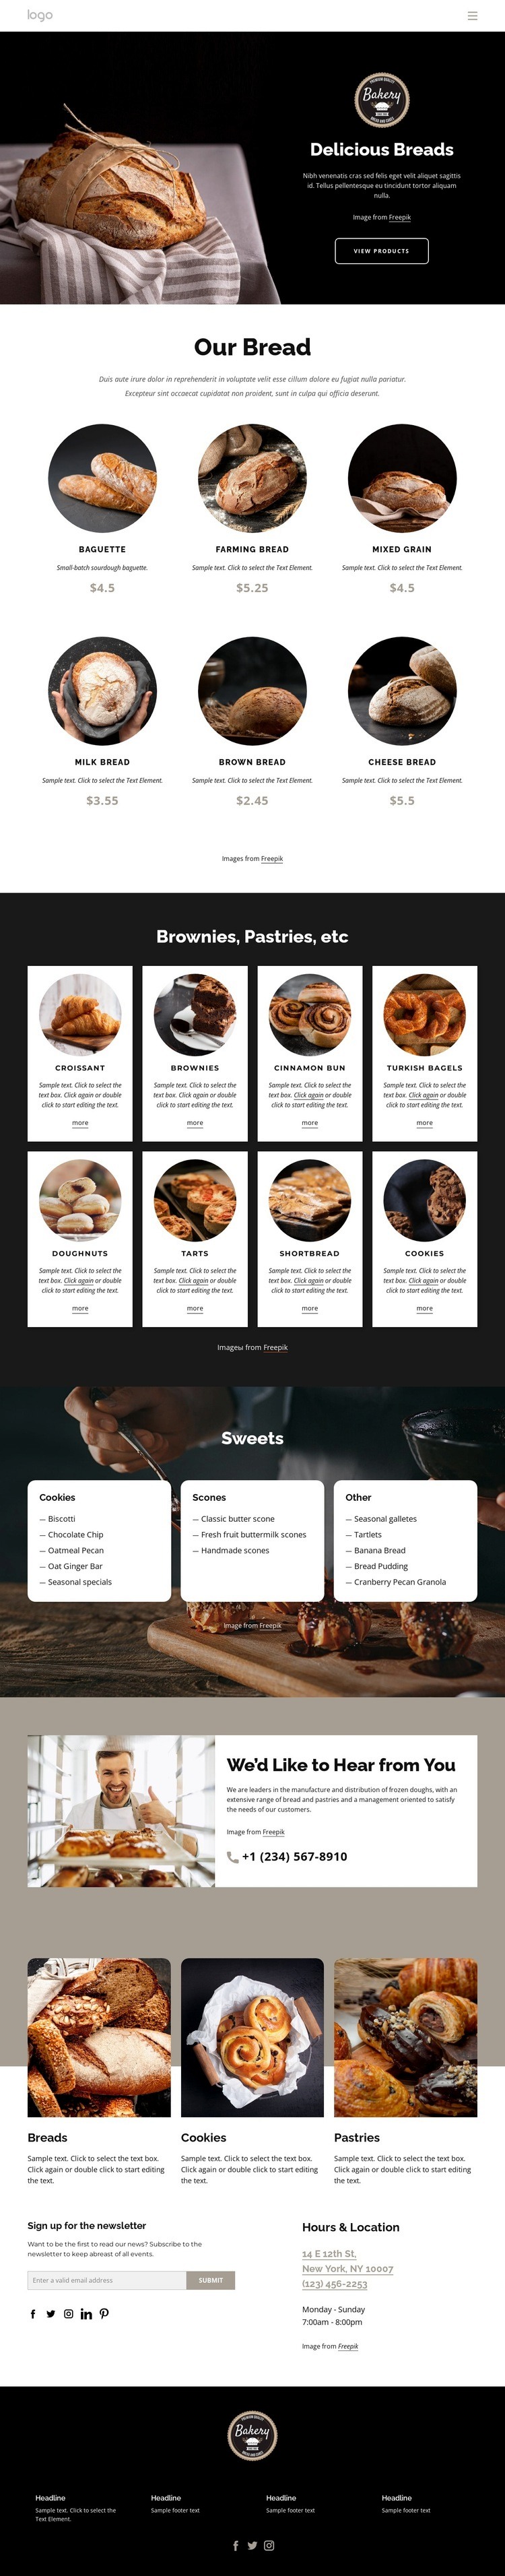 Delicious breads Homepage Design